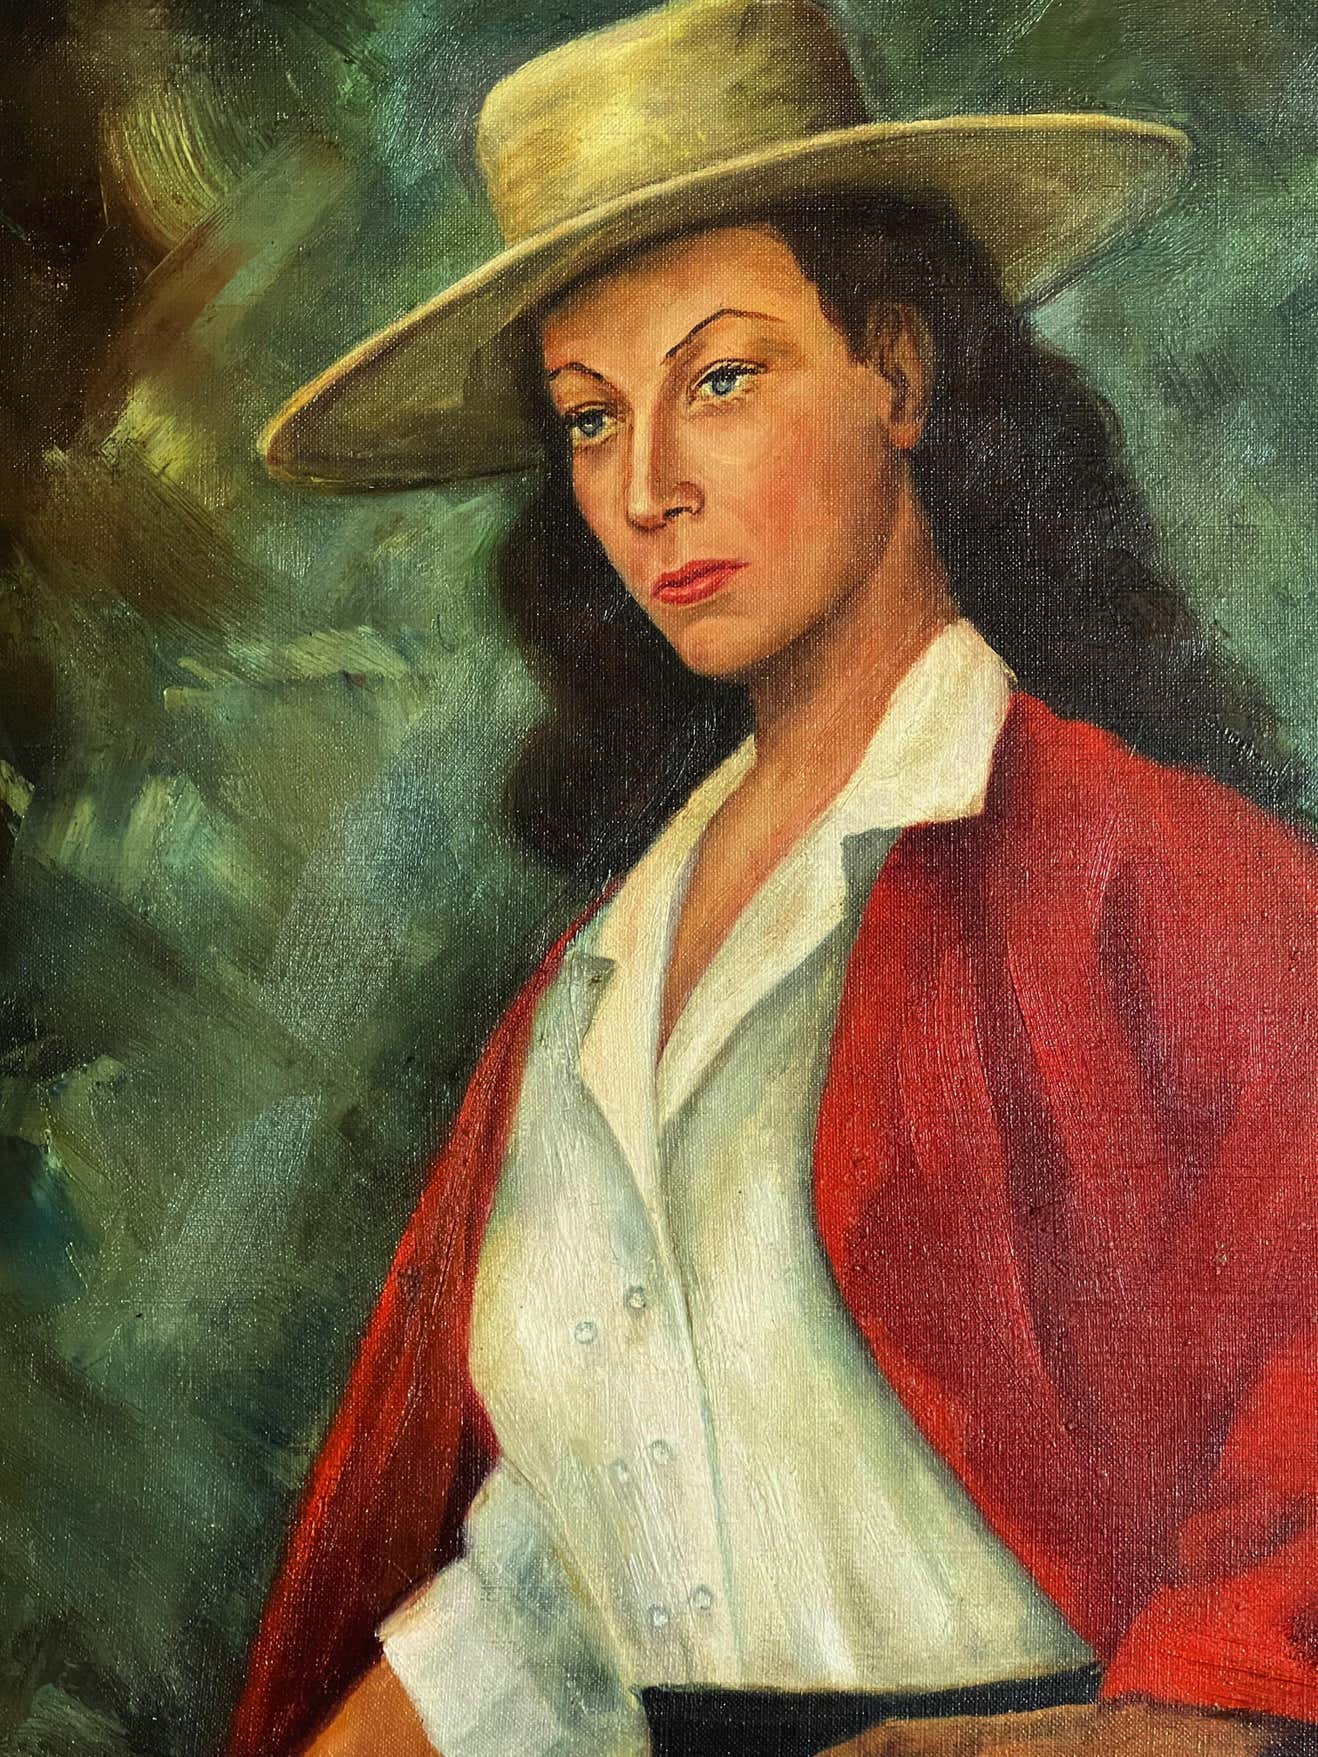 "Amazon" Horsewoman Portrait - Oil Painting on Canvas